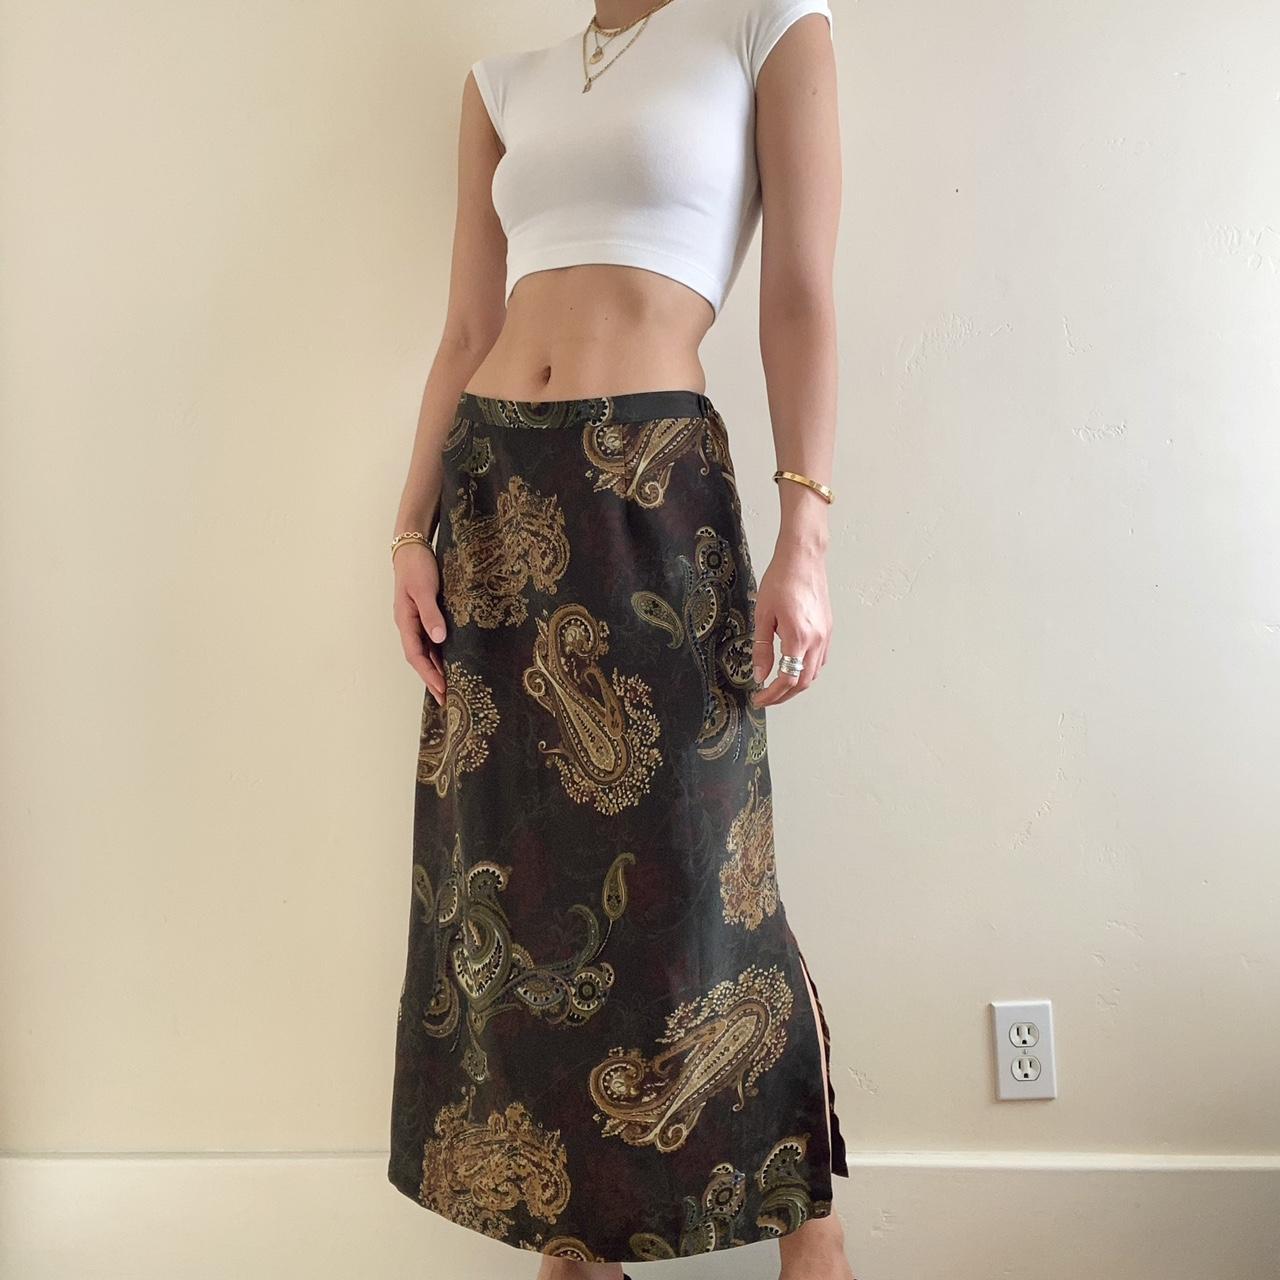 Stunning Maxi Paisley Skirt - Size M (runs true to... - Depop